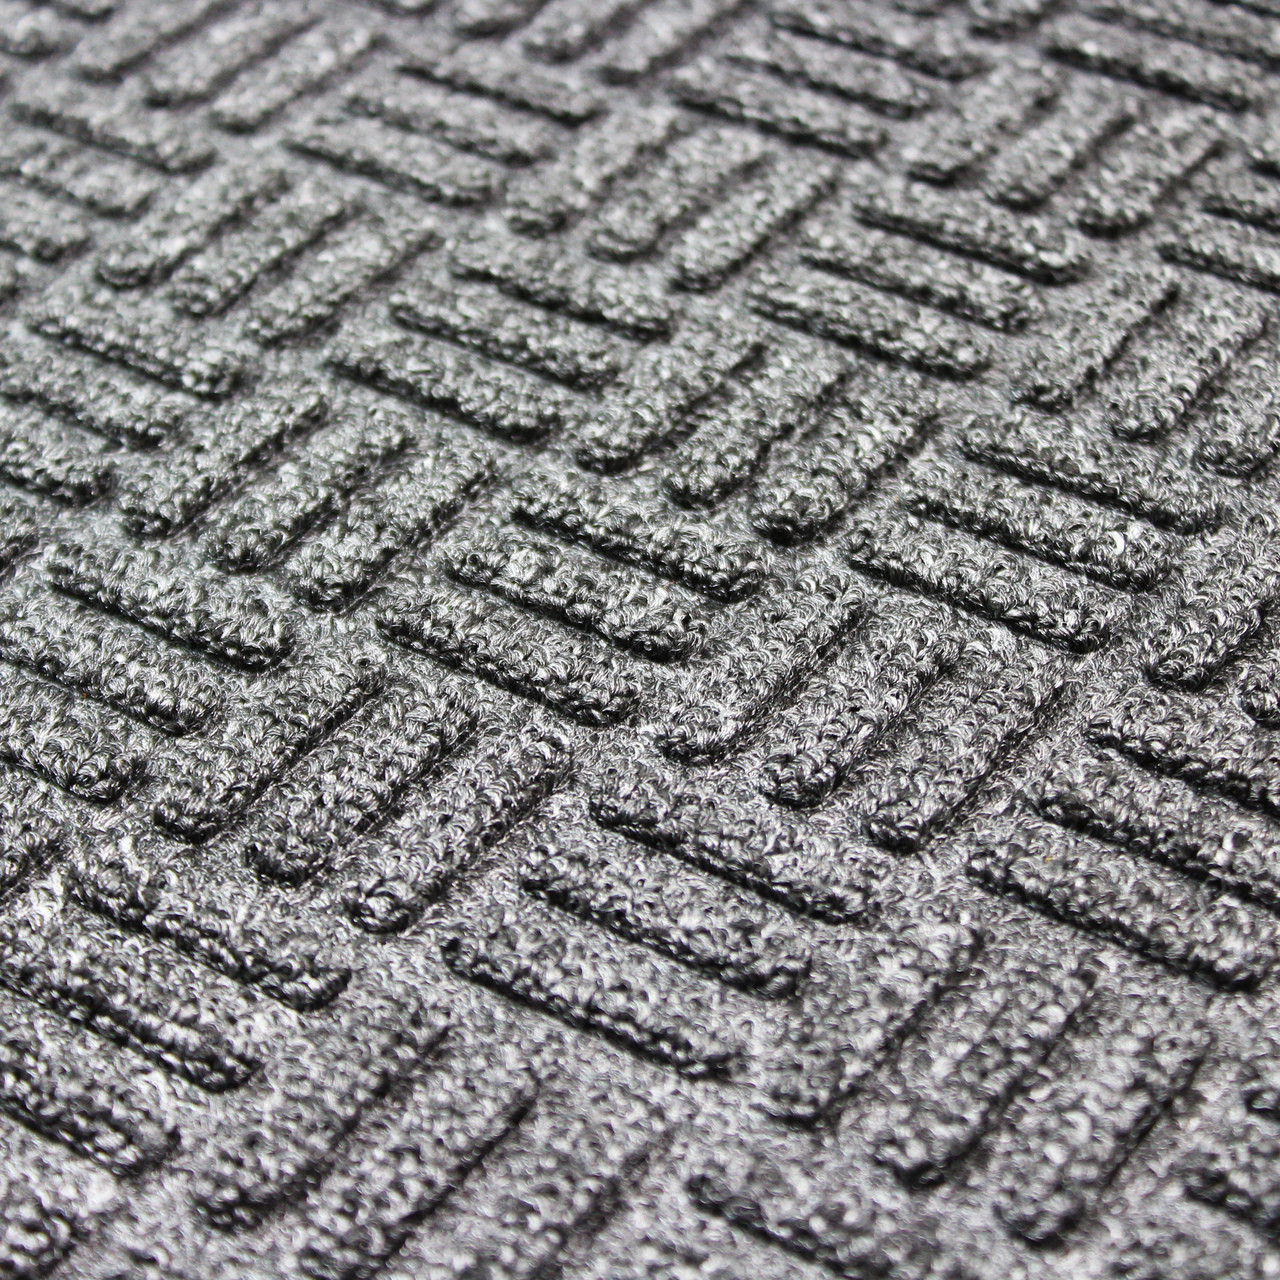 Ultralux Indoor Entrance Mat | Polypropylene Fibers and Anti-Slip Vinyl Backed Entry Rug Doormat | Brown